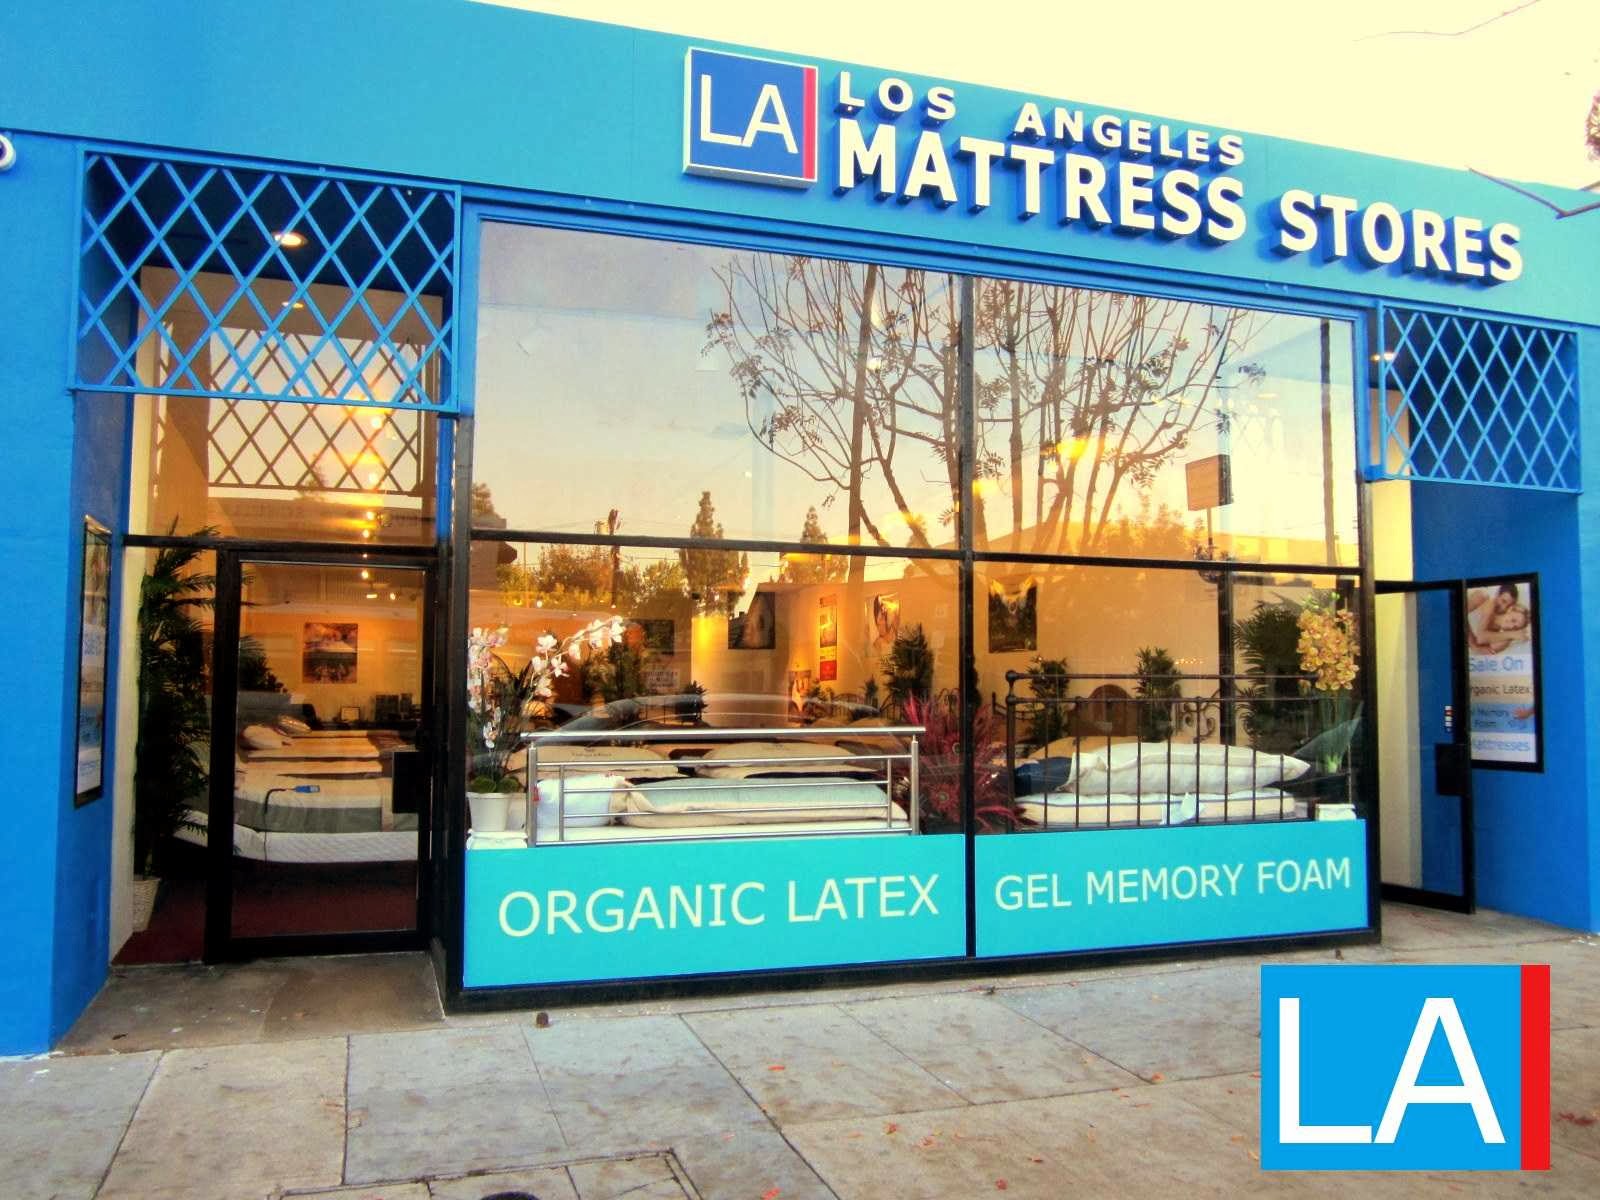 Los Angeles Mattress Stores - Studio City